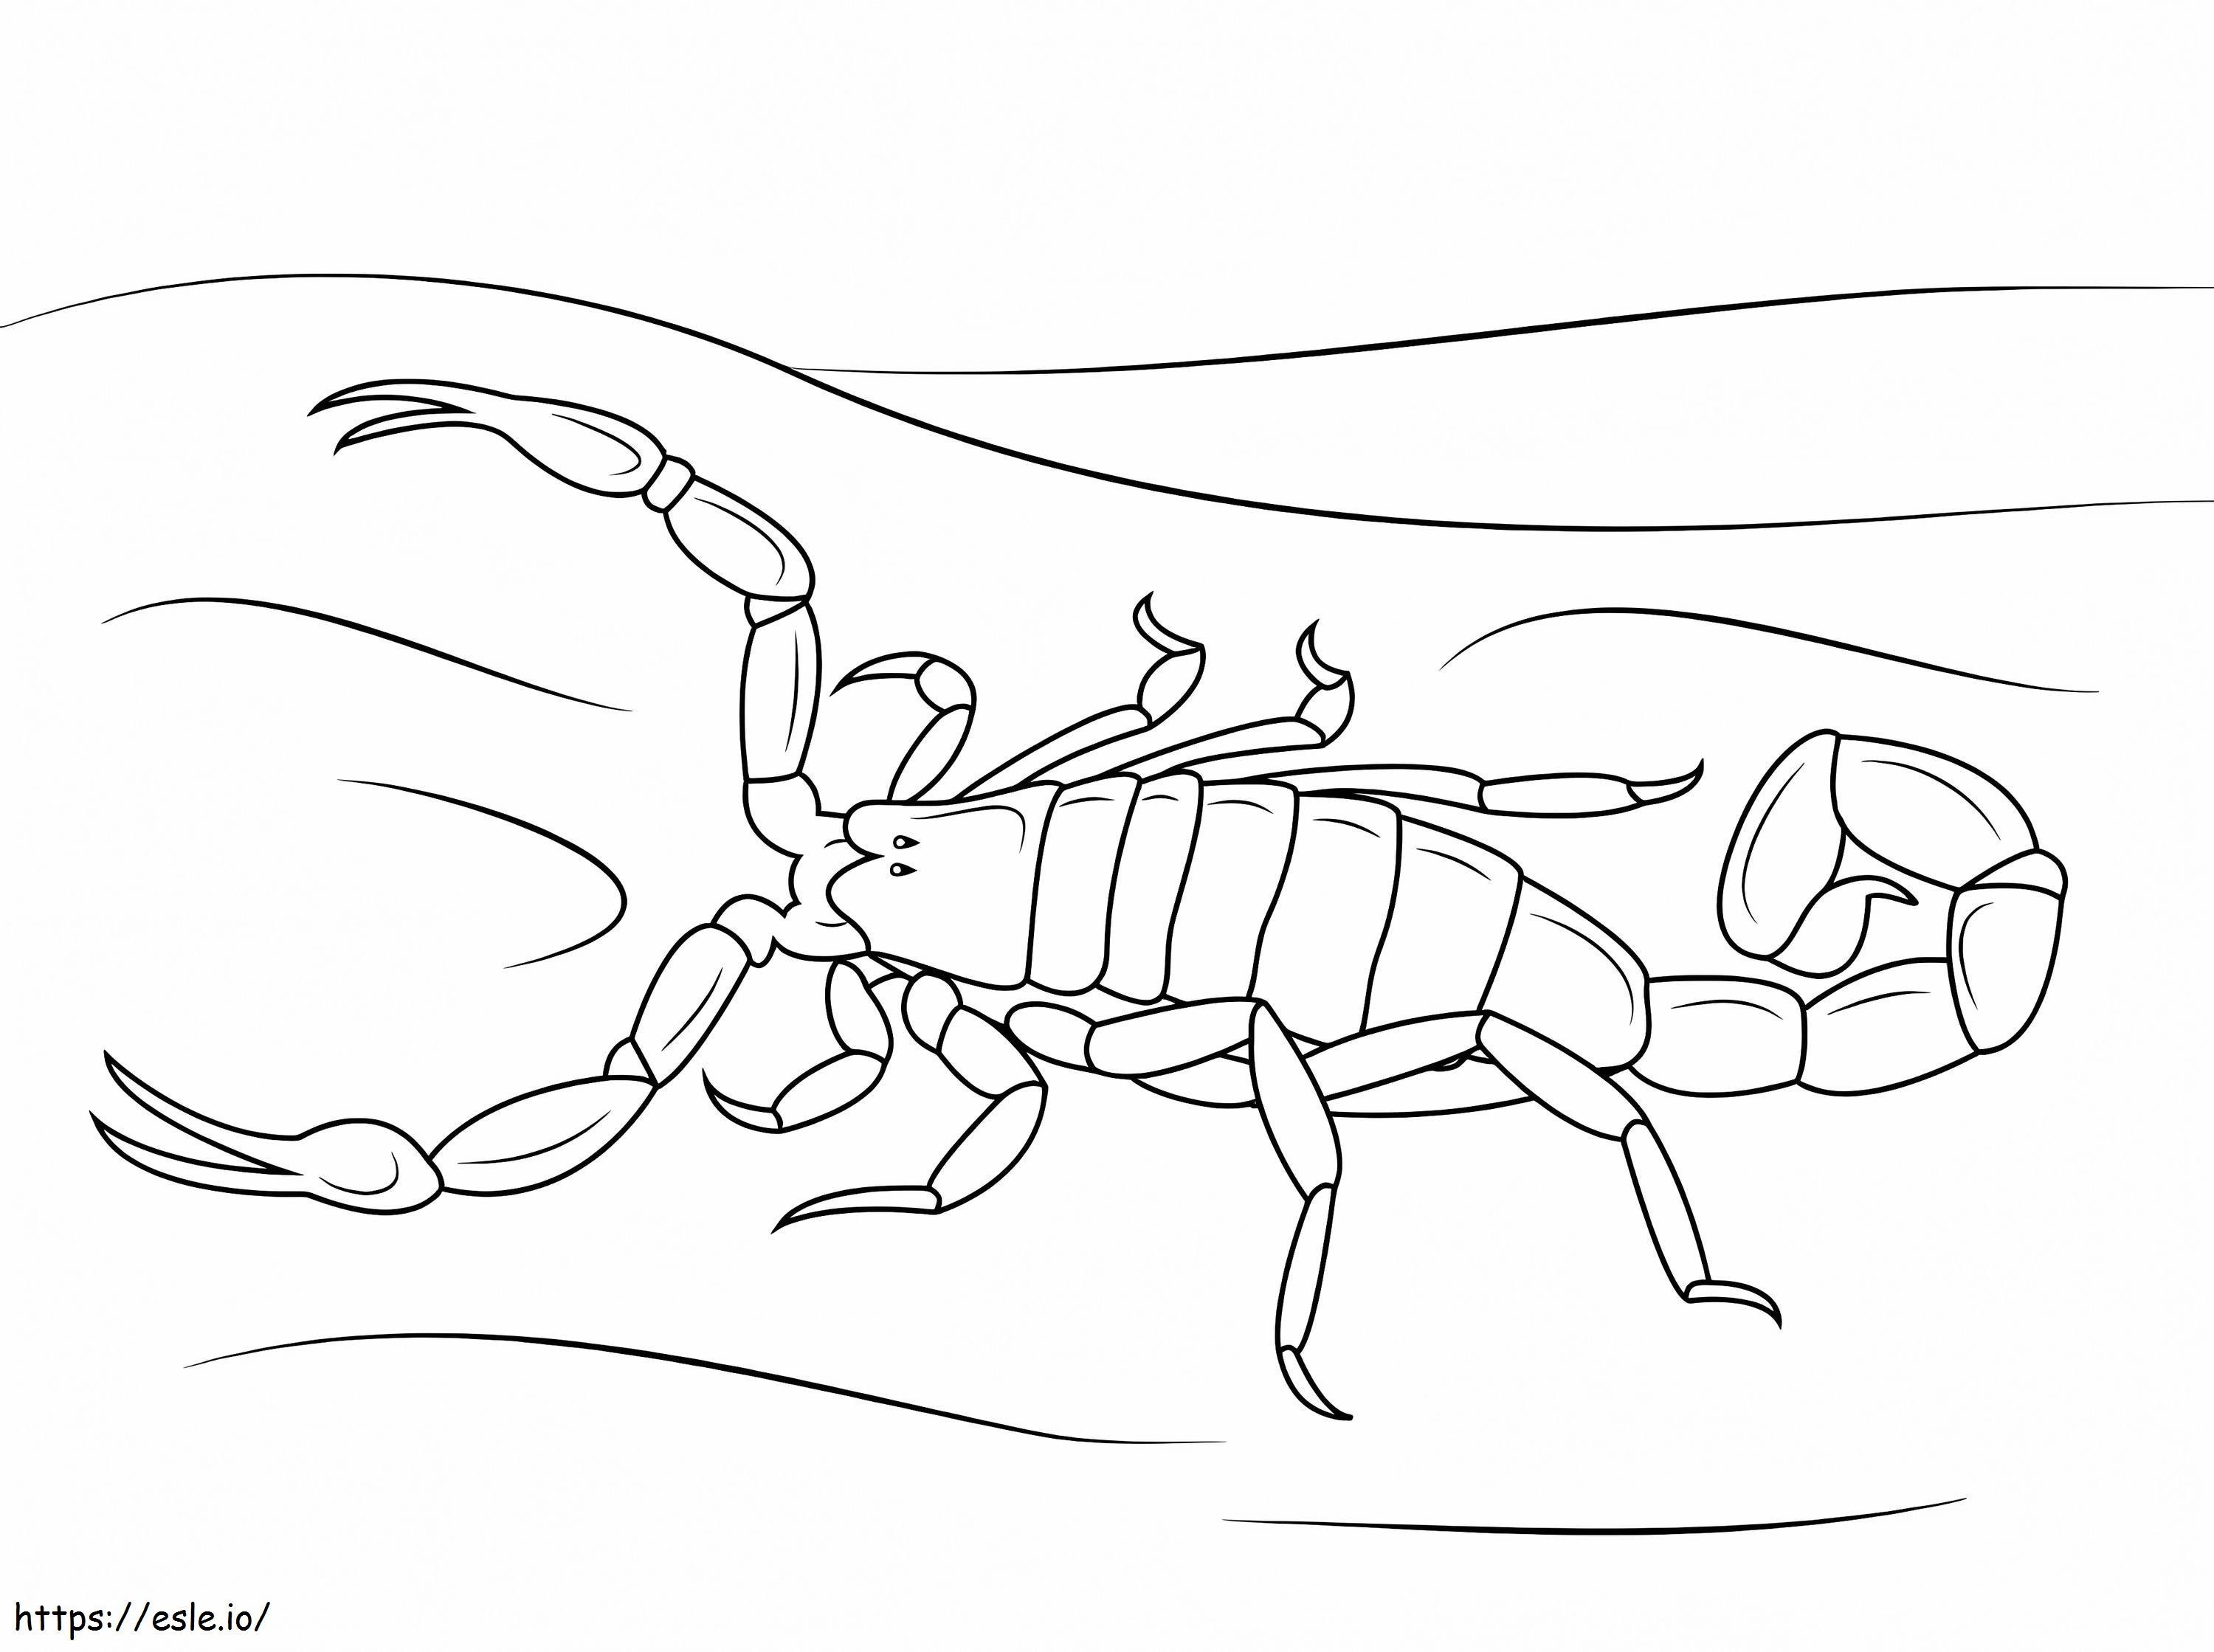 Skorpion z kory pasiastej kolorowanka